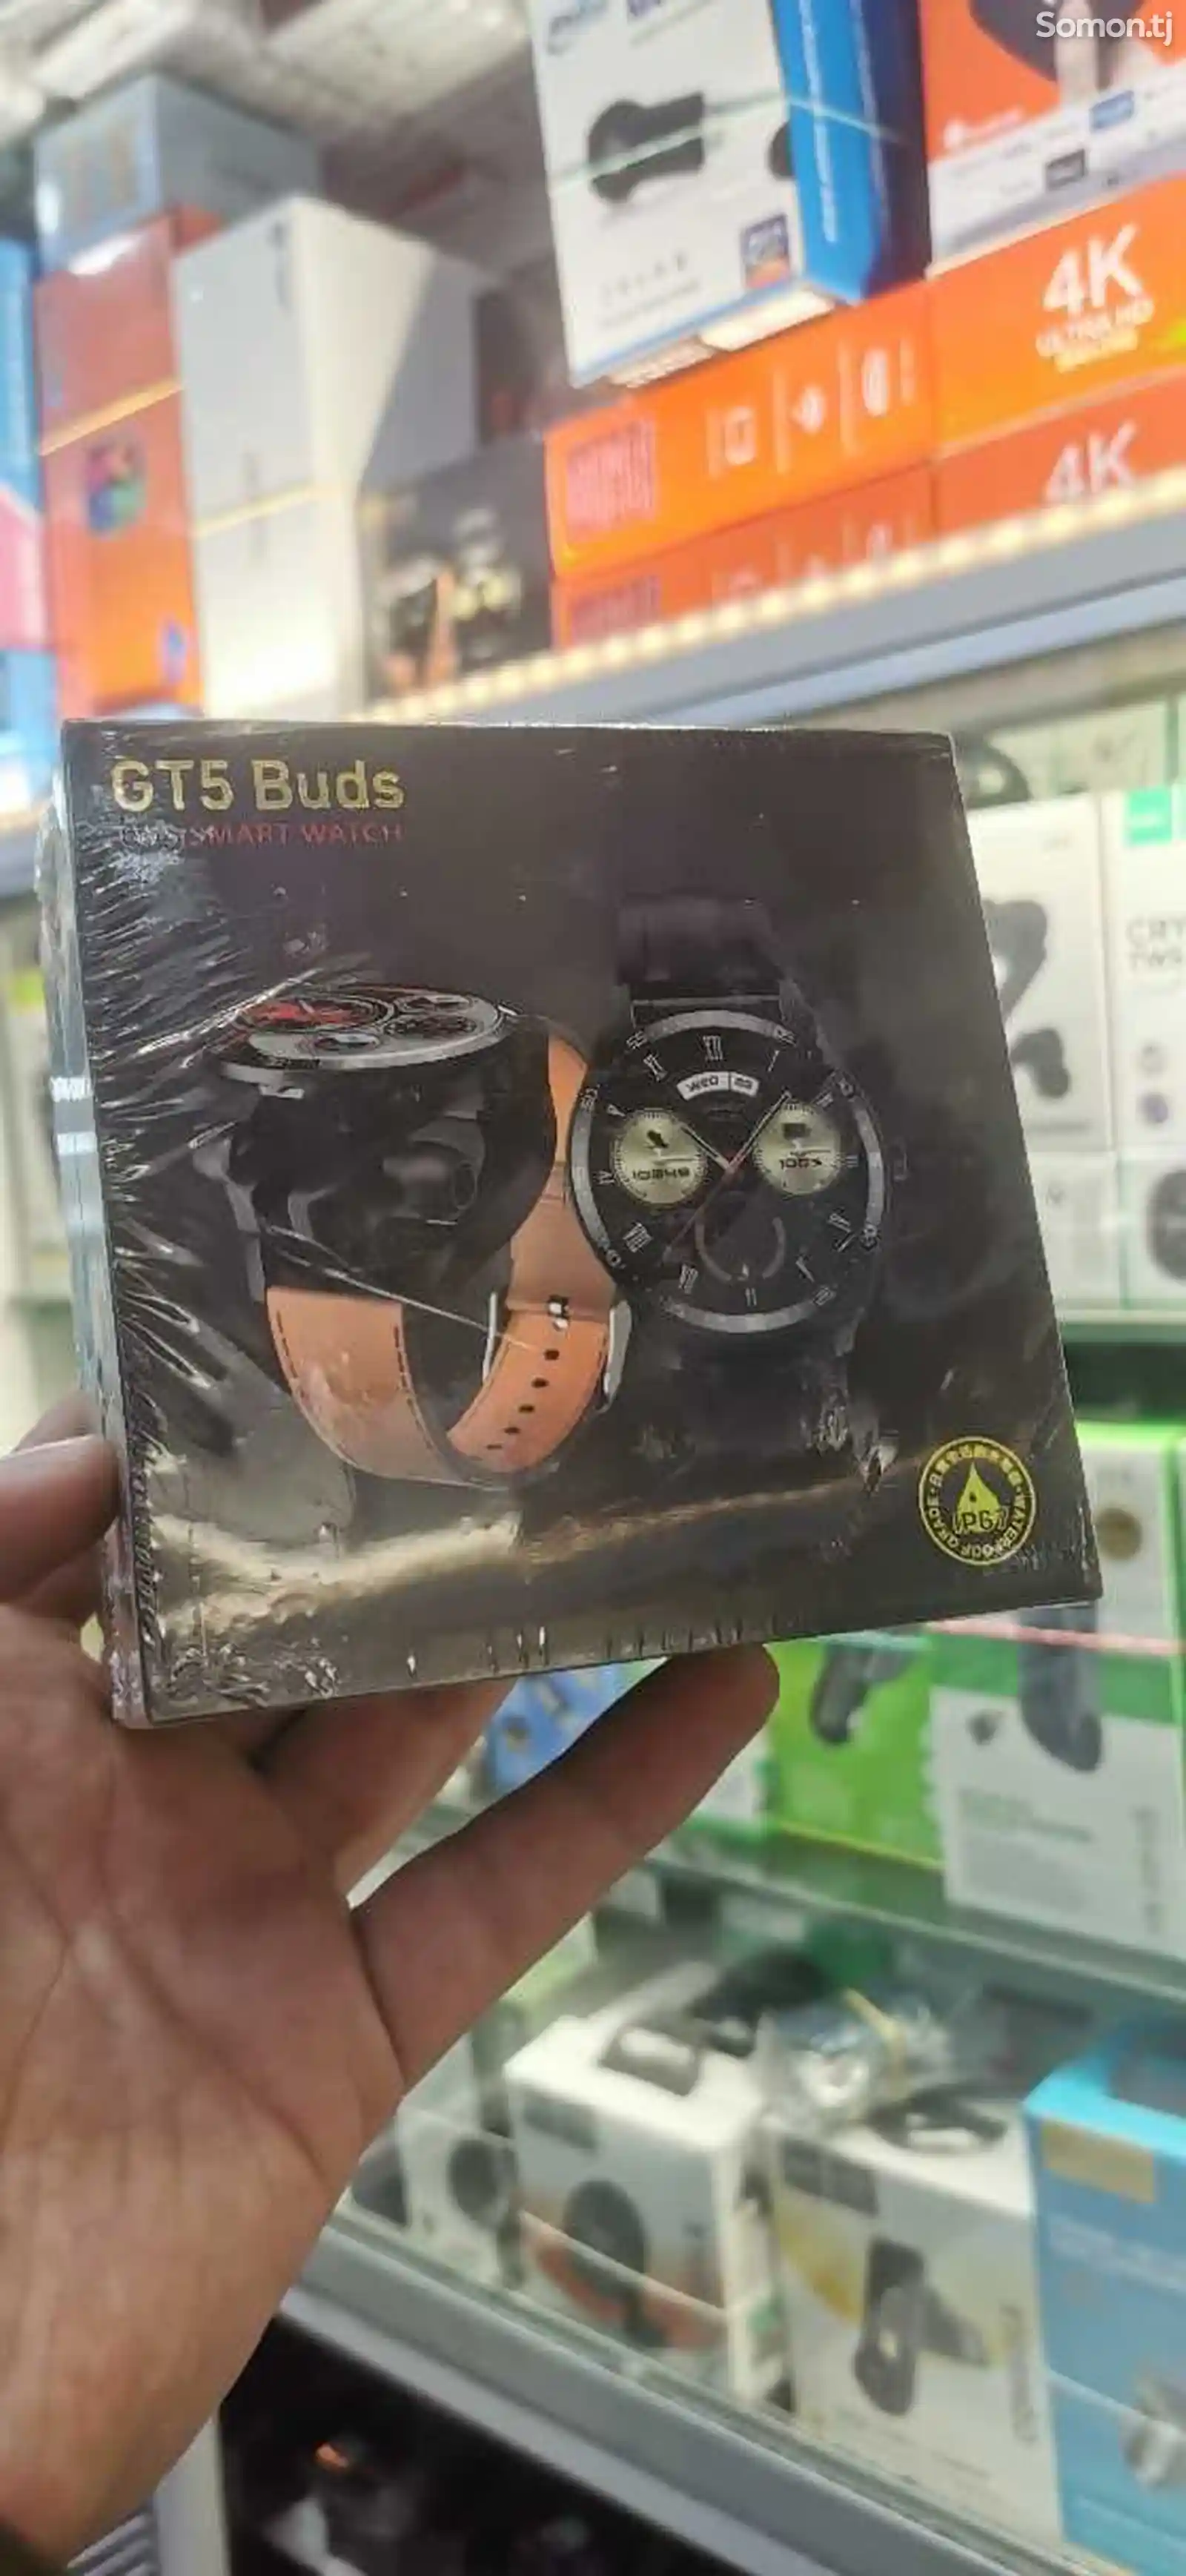 Смарт часы Smart Watch GT5 Buds-6